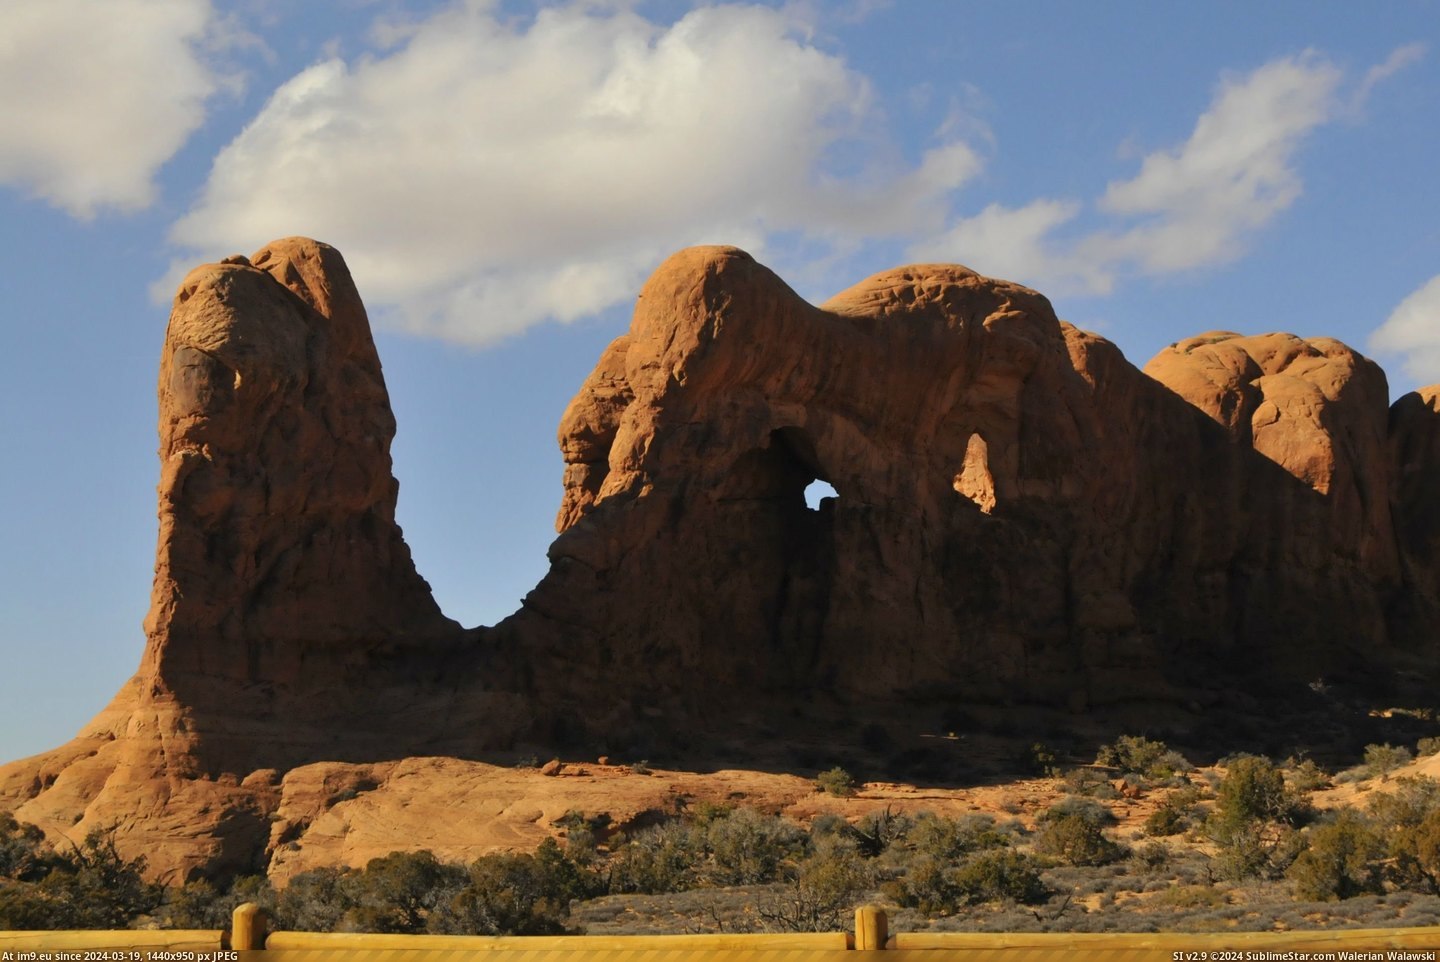 #Shot #Saw #Elephant #Moab #Rock #Utah [Earthporn] Elephant Rock i saw and shot in Moab, Utah. [2894x1922] Pic. (Image of album My r/EARTHPORN favs))